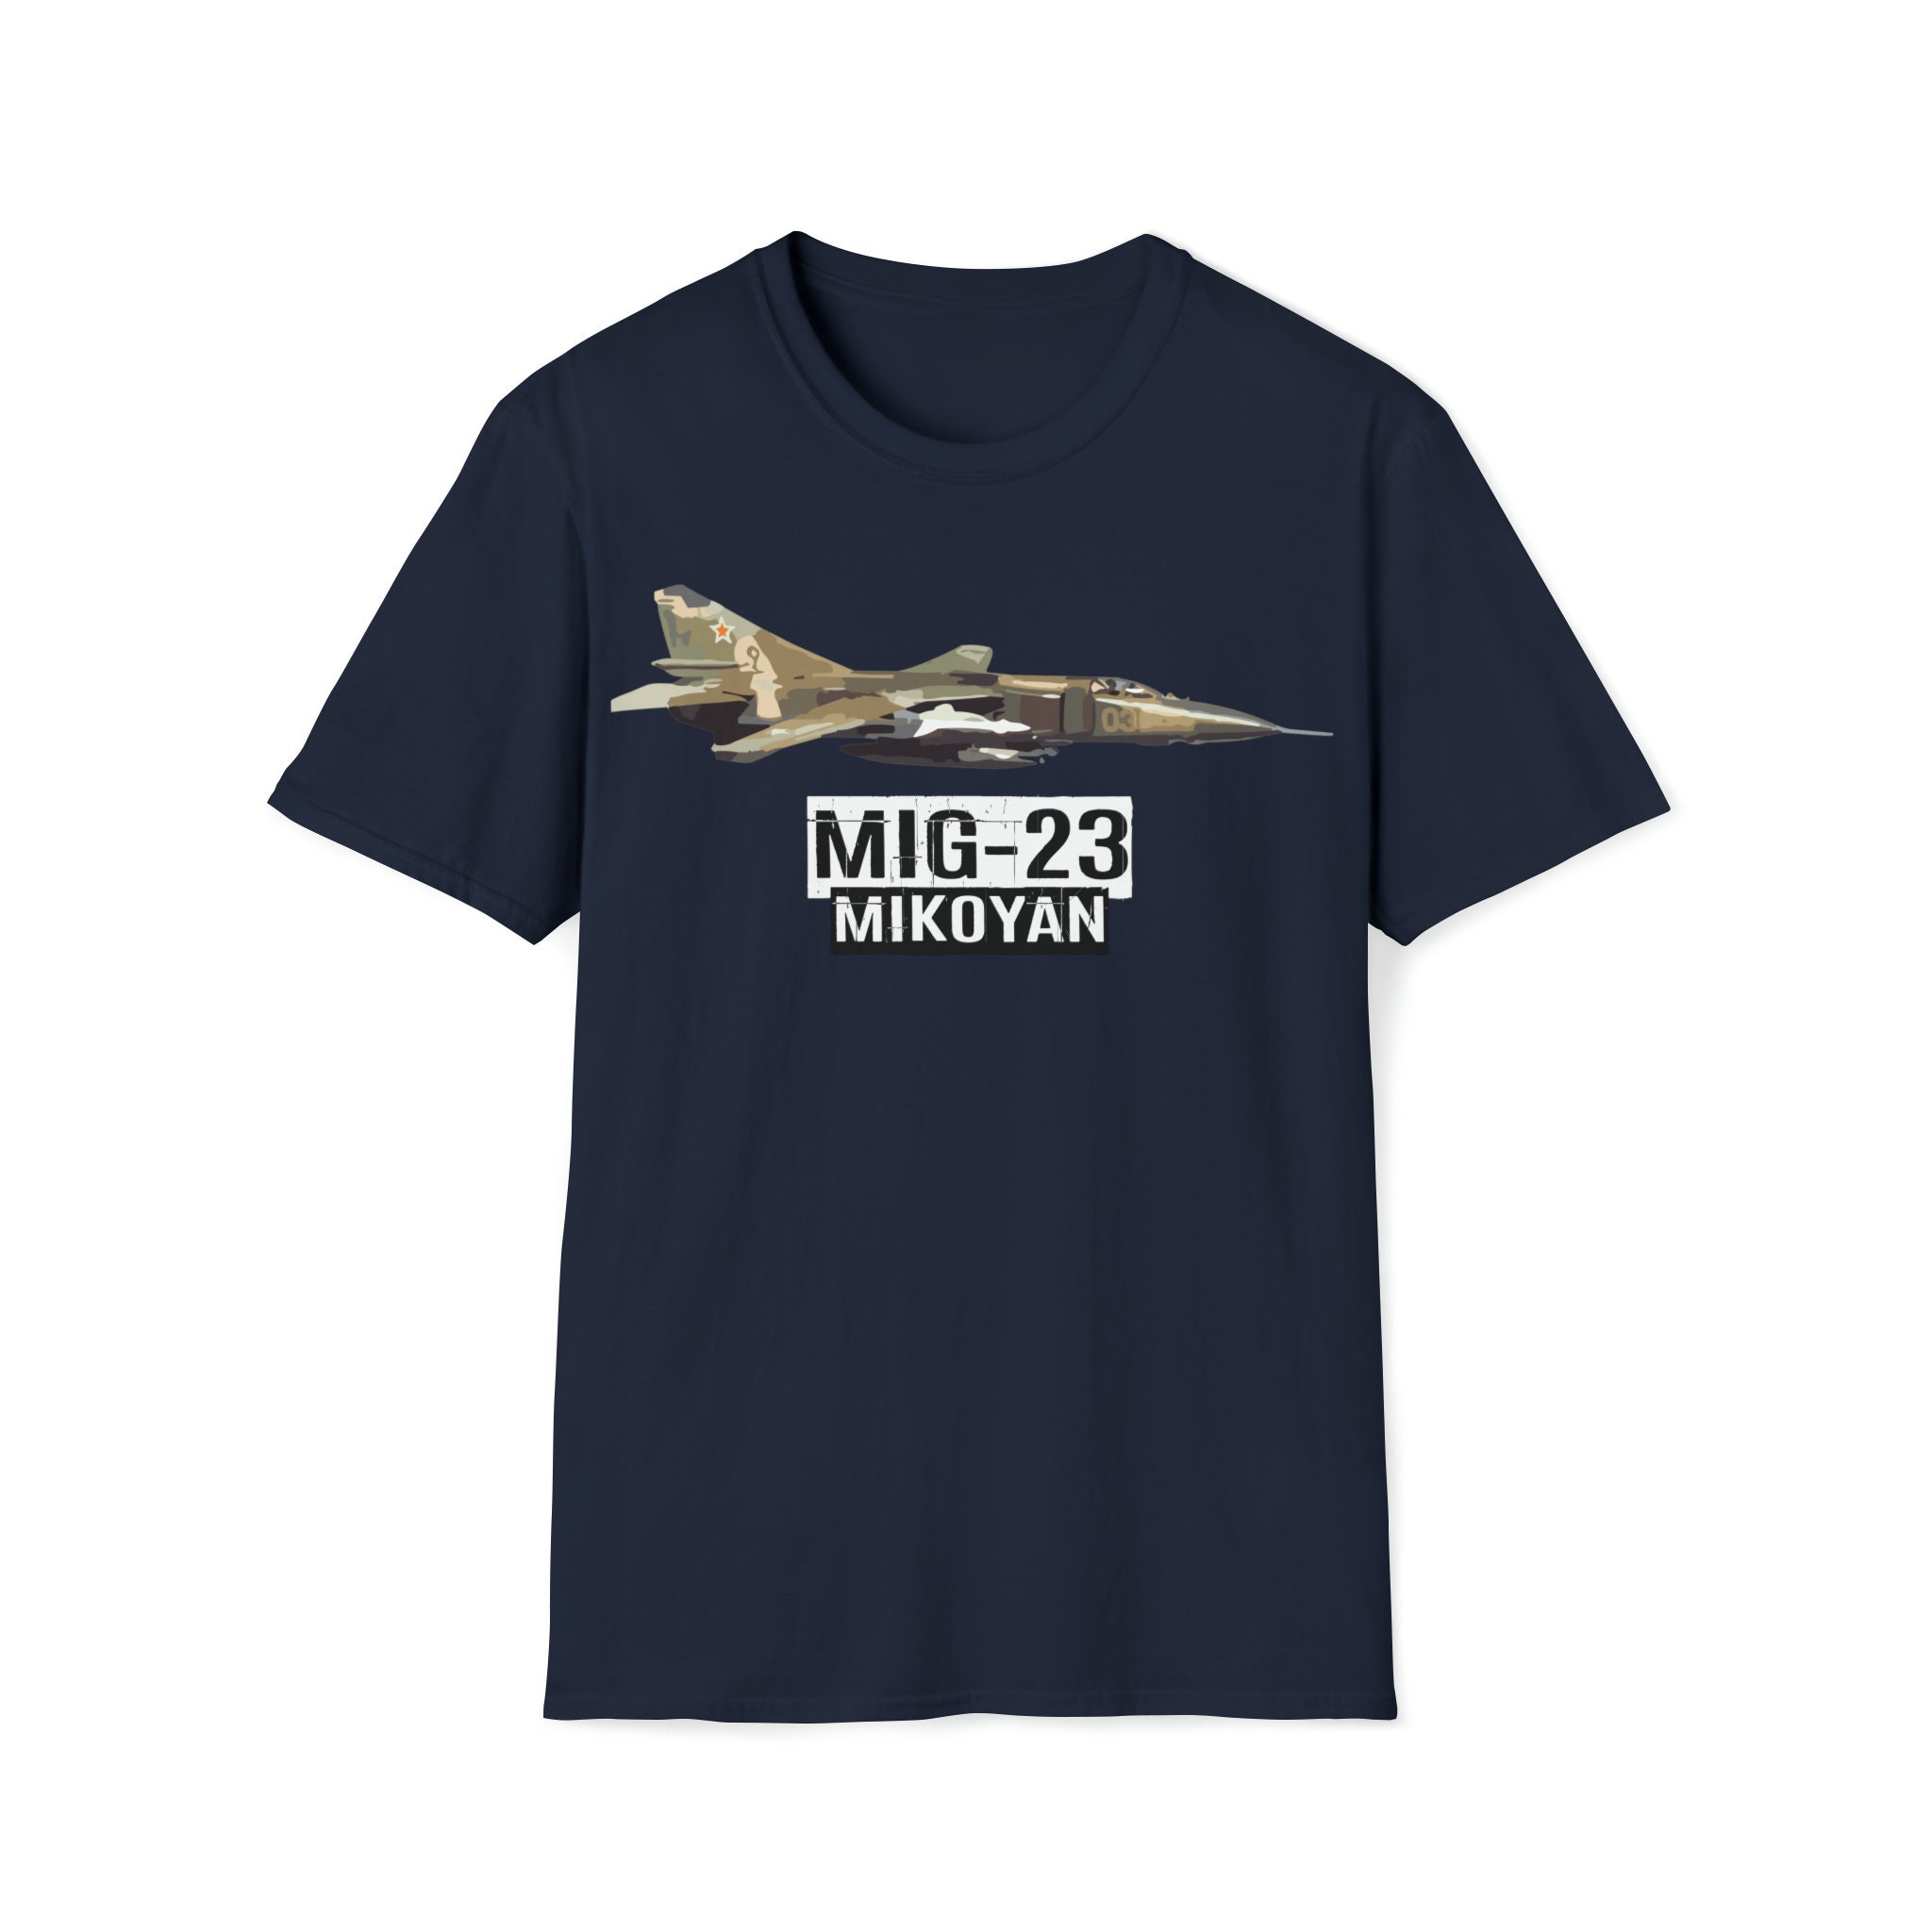 Mikoyan Mig-23 T-shirt, Mig23 Fighter Jet T-shirt, Fighter Aircraft ...